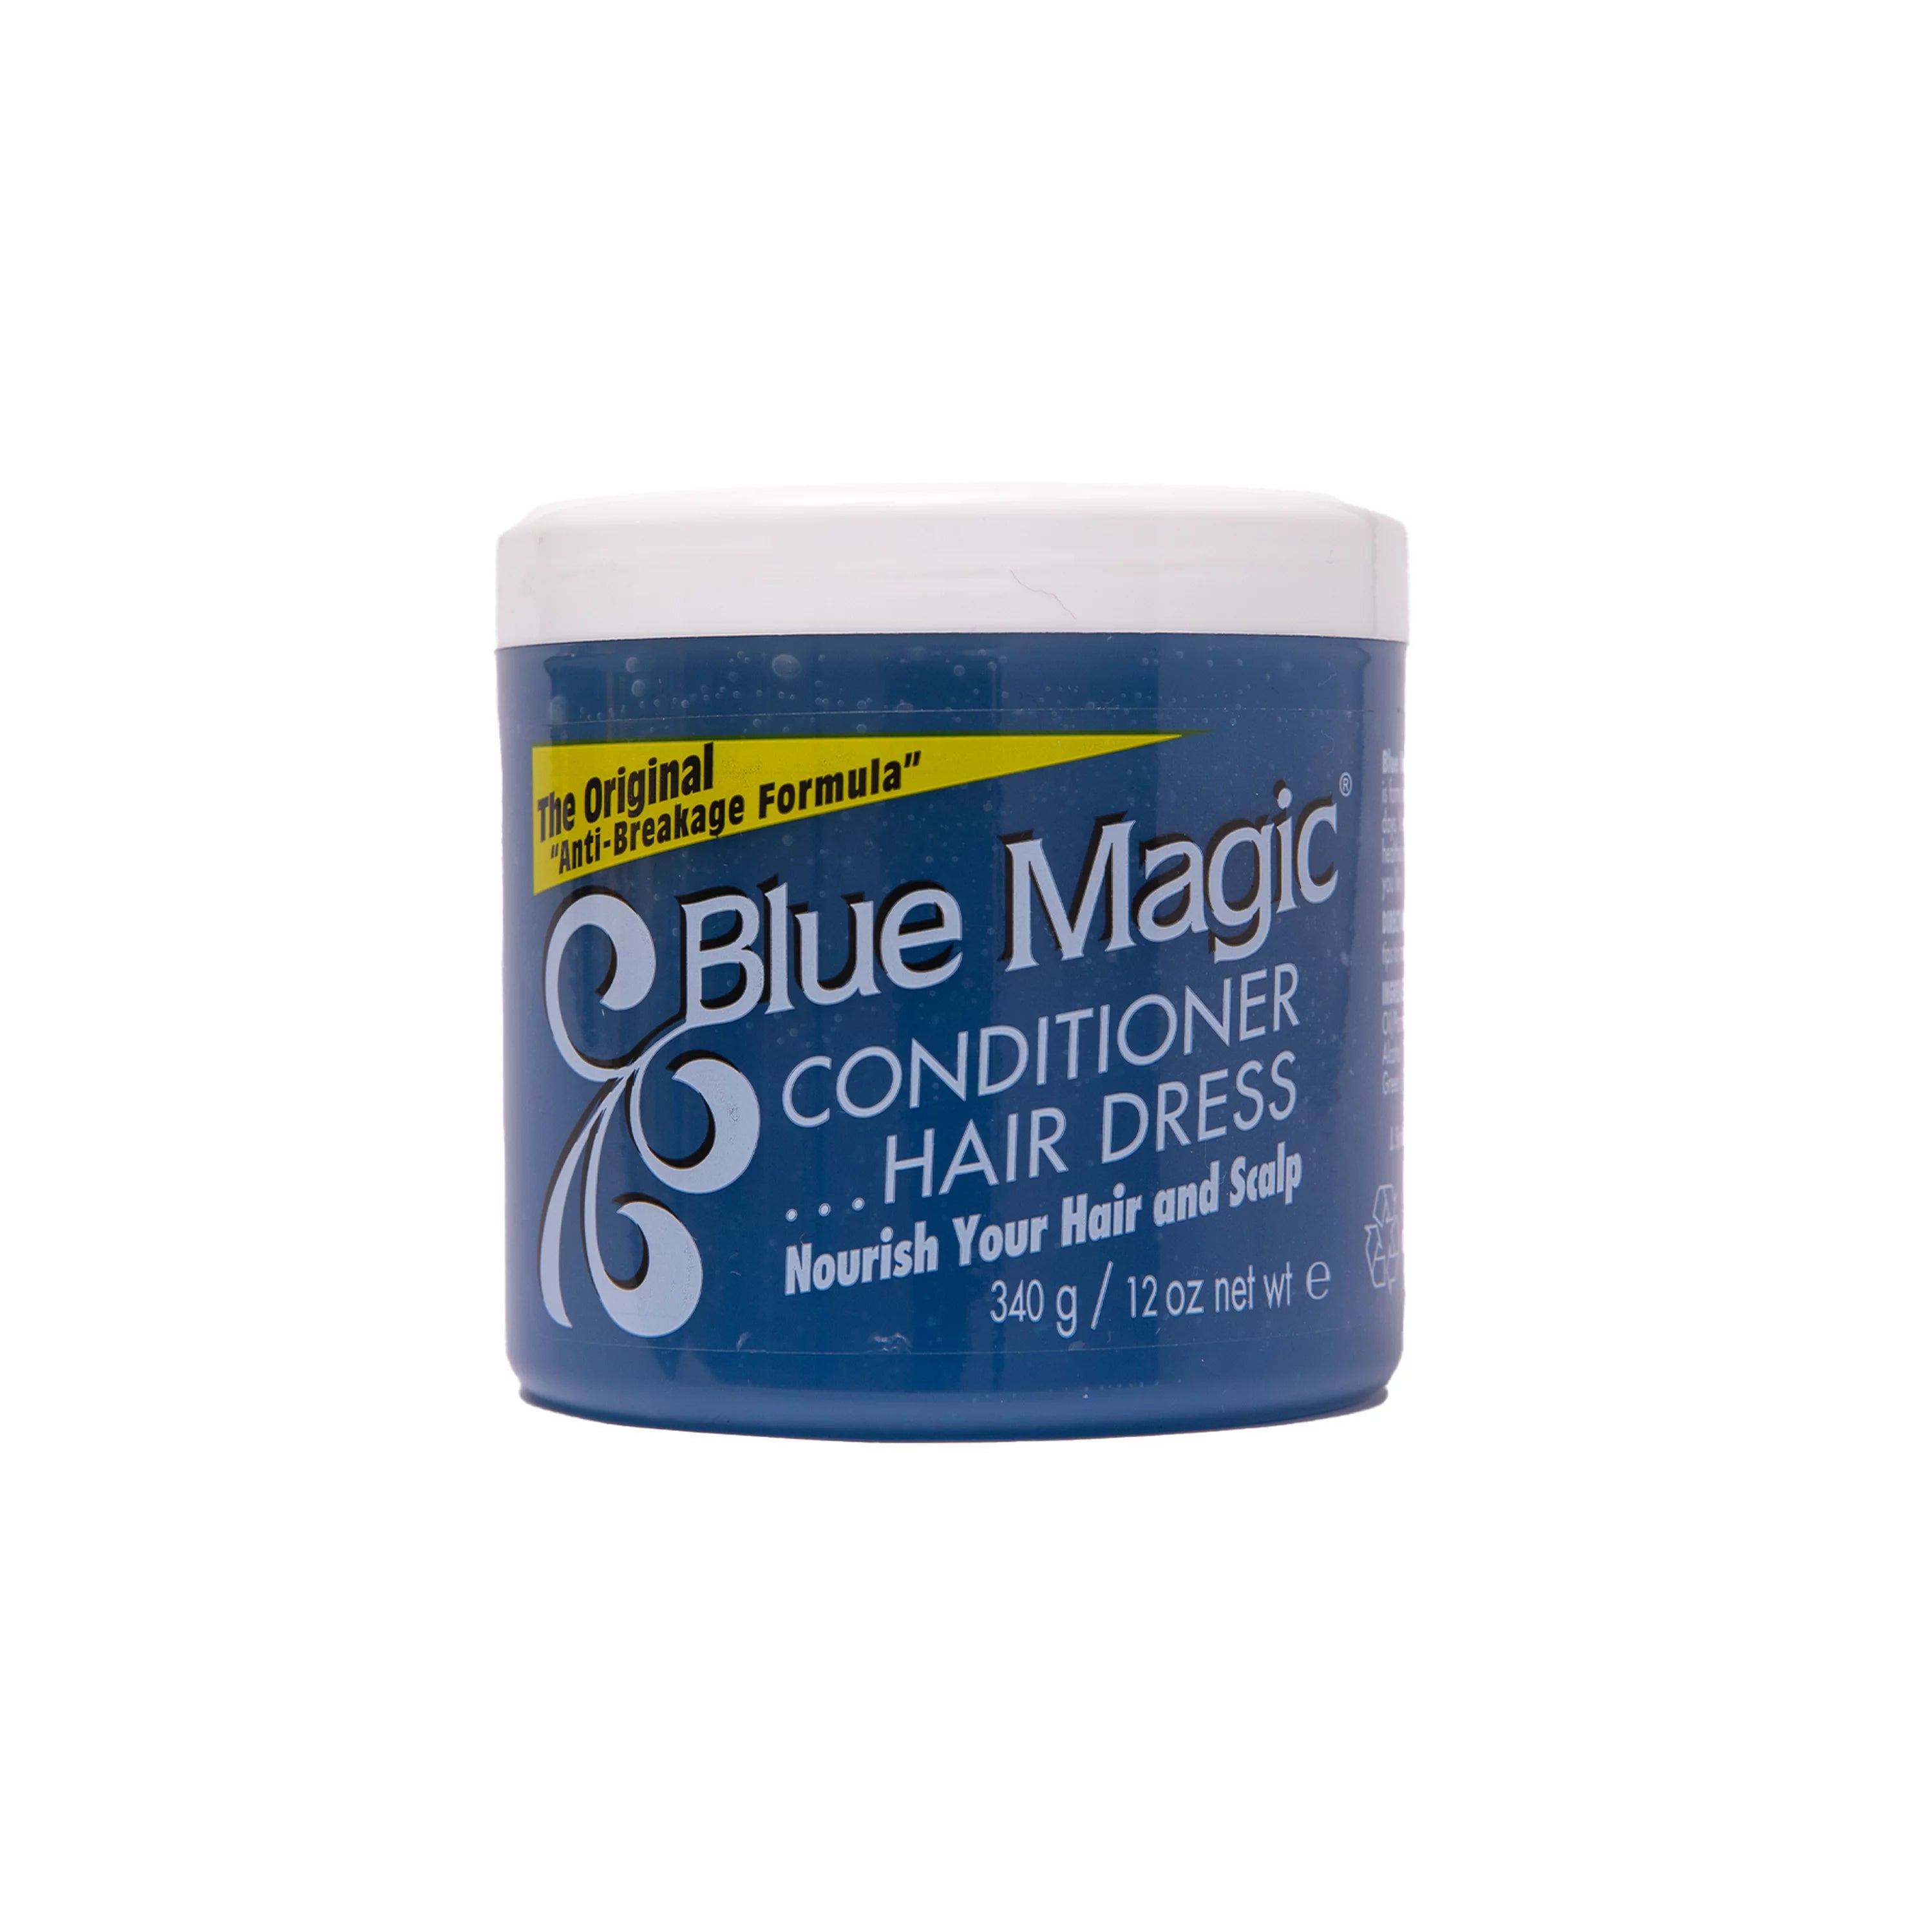 BLUE MAGIC ANTI-BREAKAGE FORMULA CONDITIONER HAIR DRESS- 12 OZ